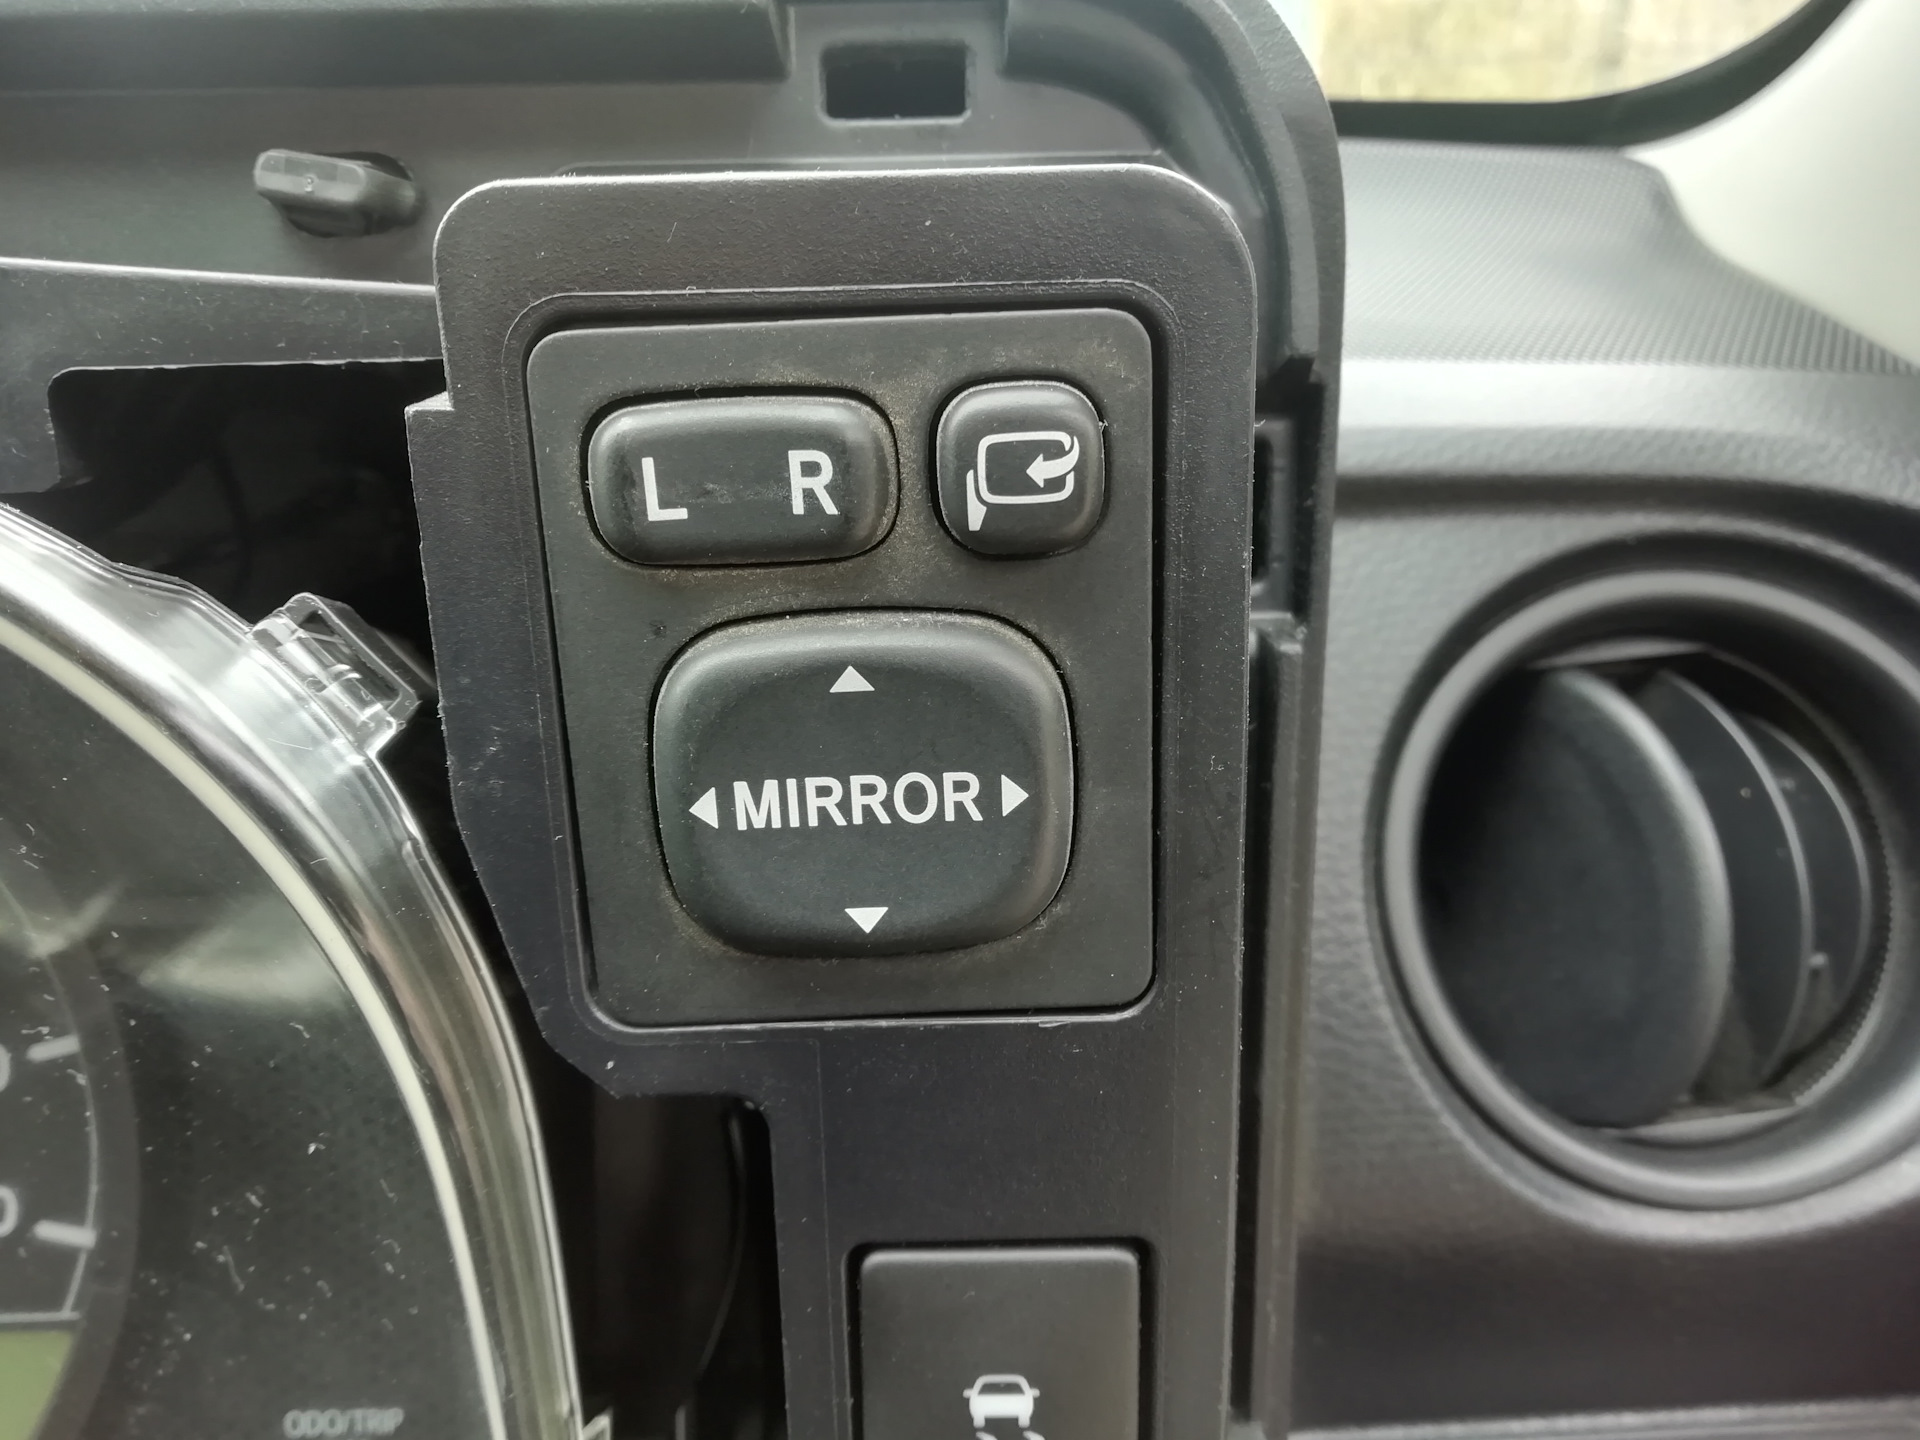 Складывание зеркал Аутлендер 3. Кнопка складывания зеркал Suzuki Grand Vitara. Кнопка складывания зеркал Киа Бонго. Subaru XV кнопка складывания зеркал.